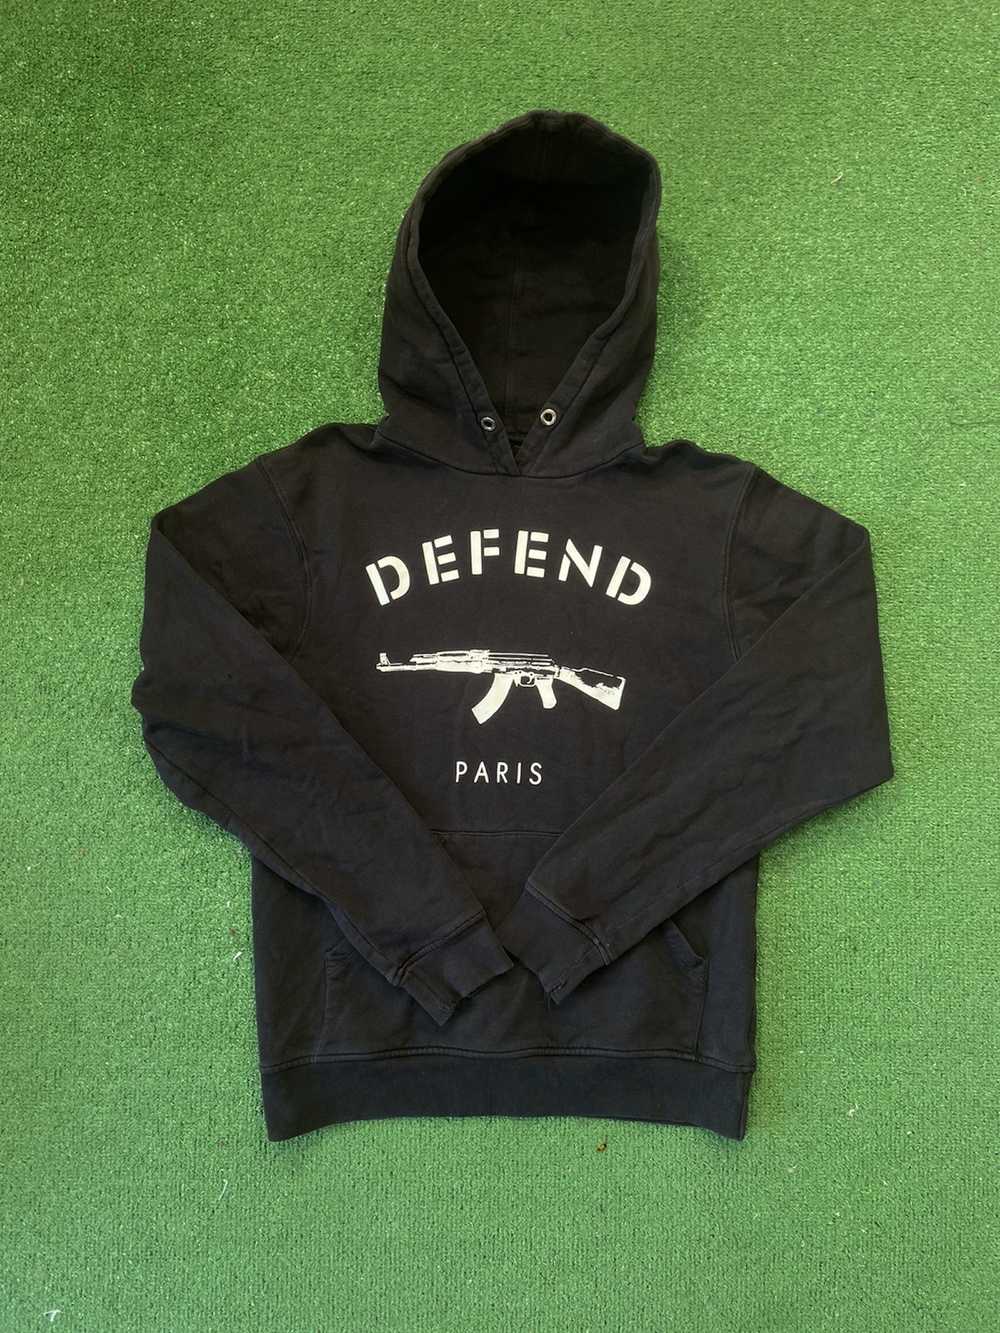 Defend Paris Defend Paris hoodie - image 1